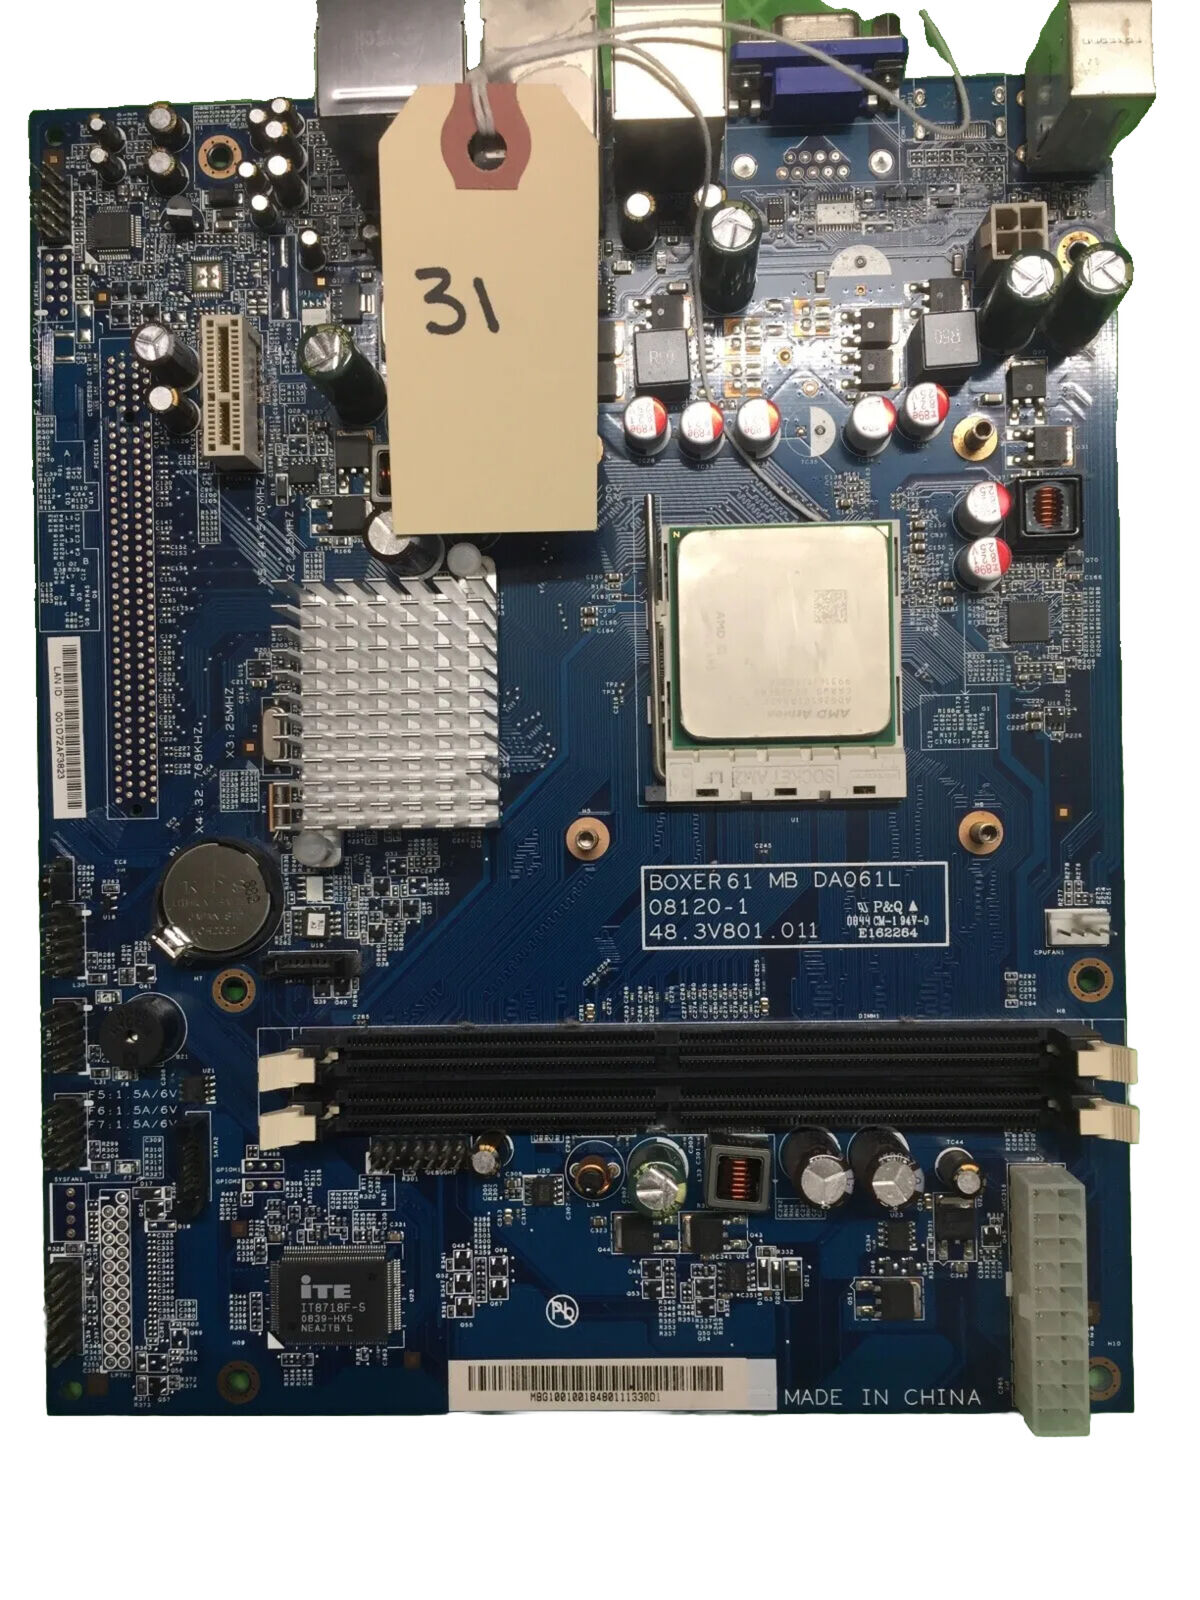 ACER BOXER 61 DA061L DDR2 , AMD Athlon 64 2650 - Tested